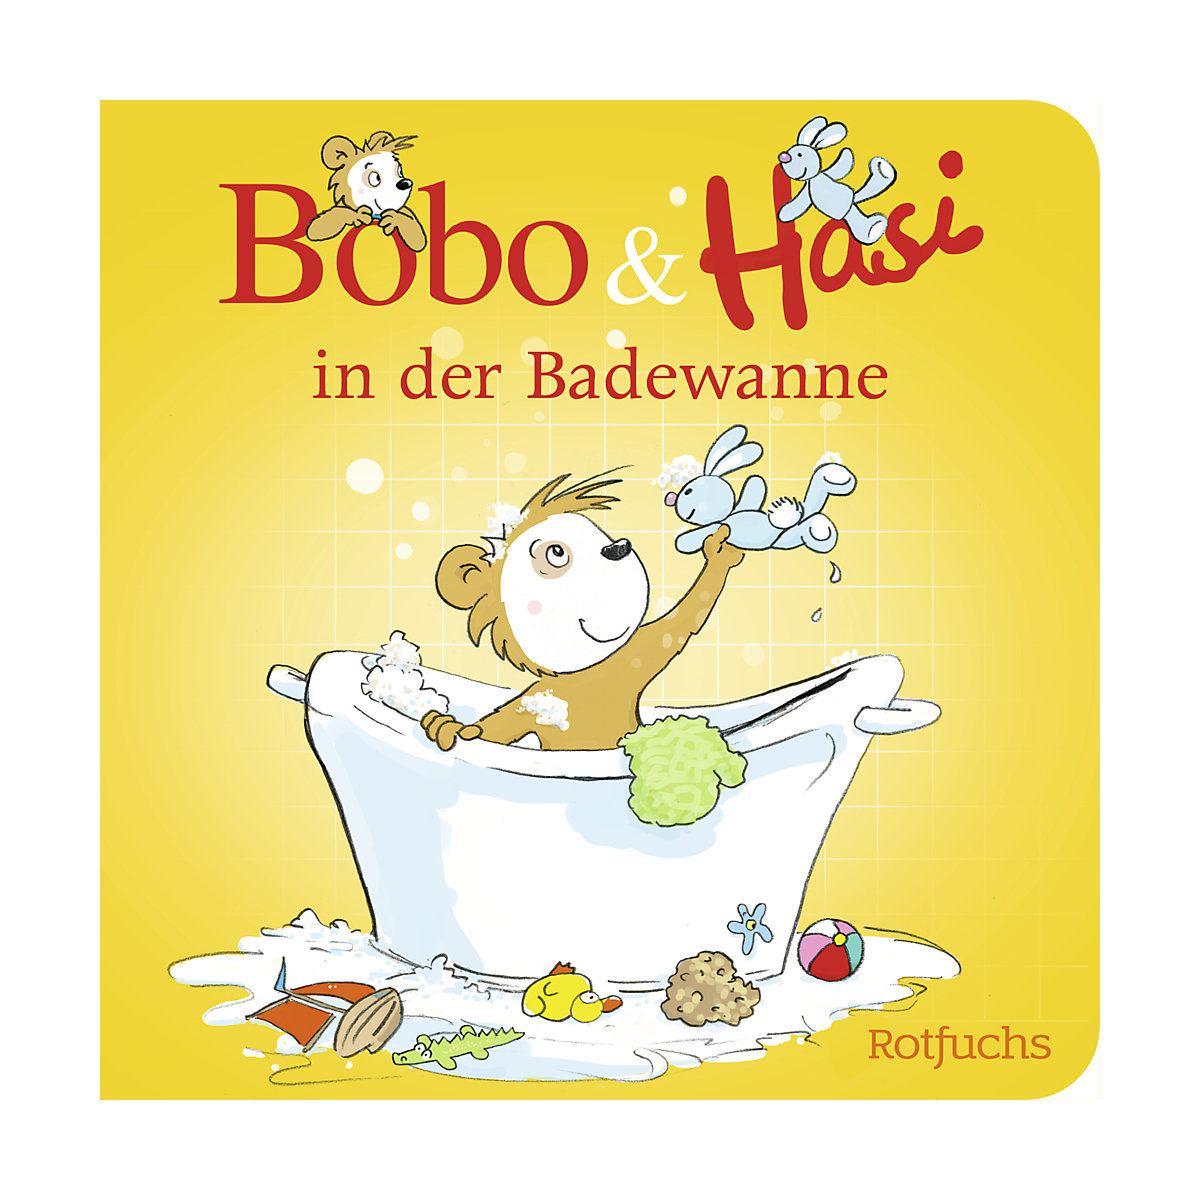 Bobo & Hasi in der Badewanne